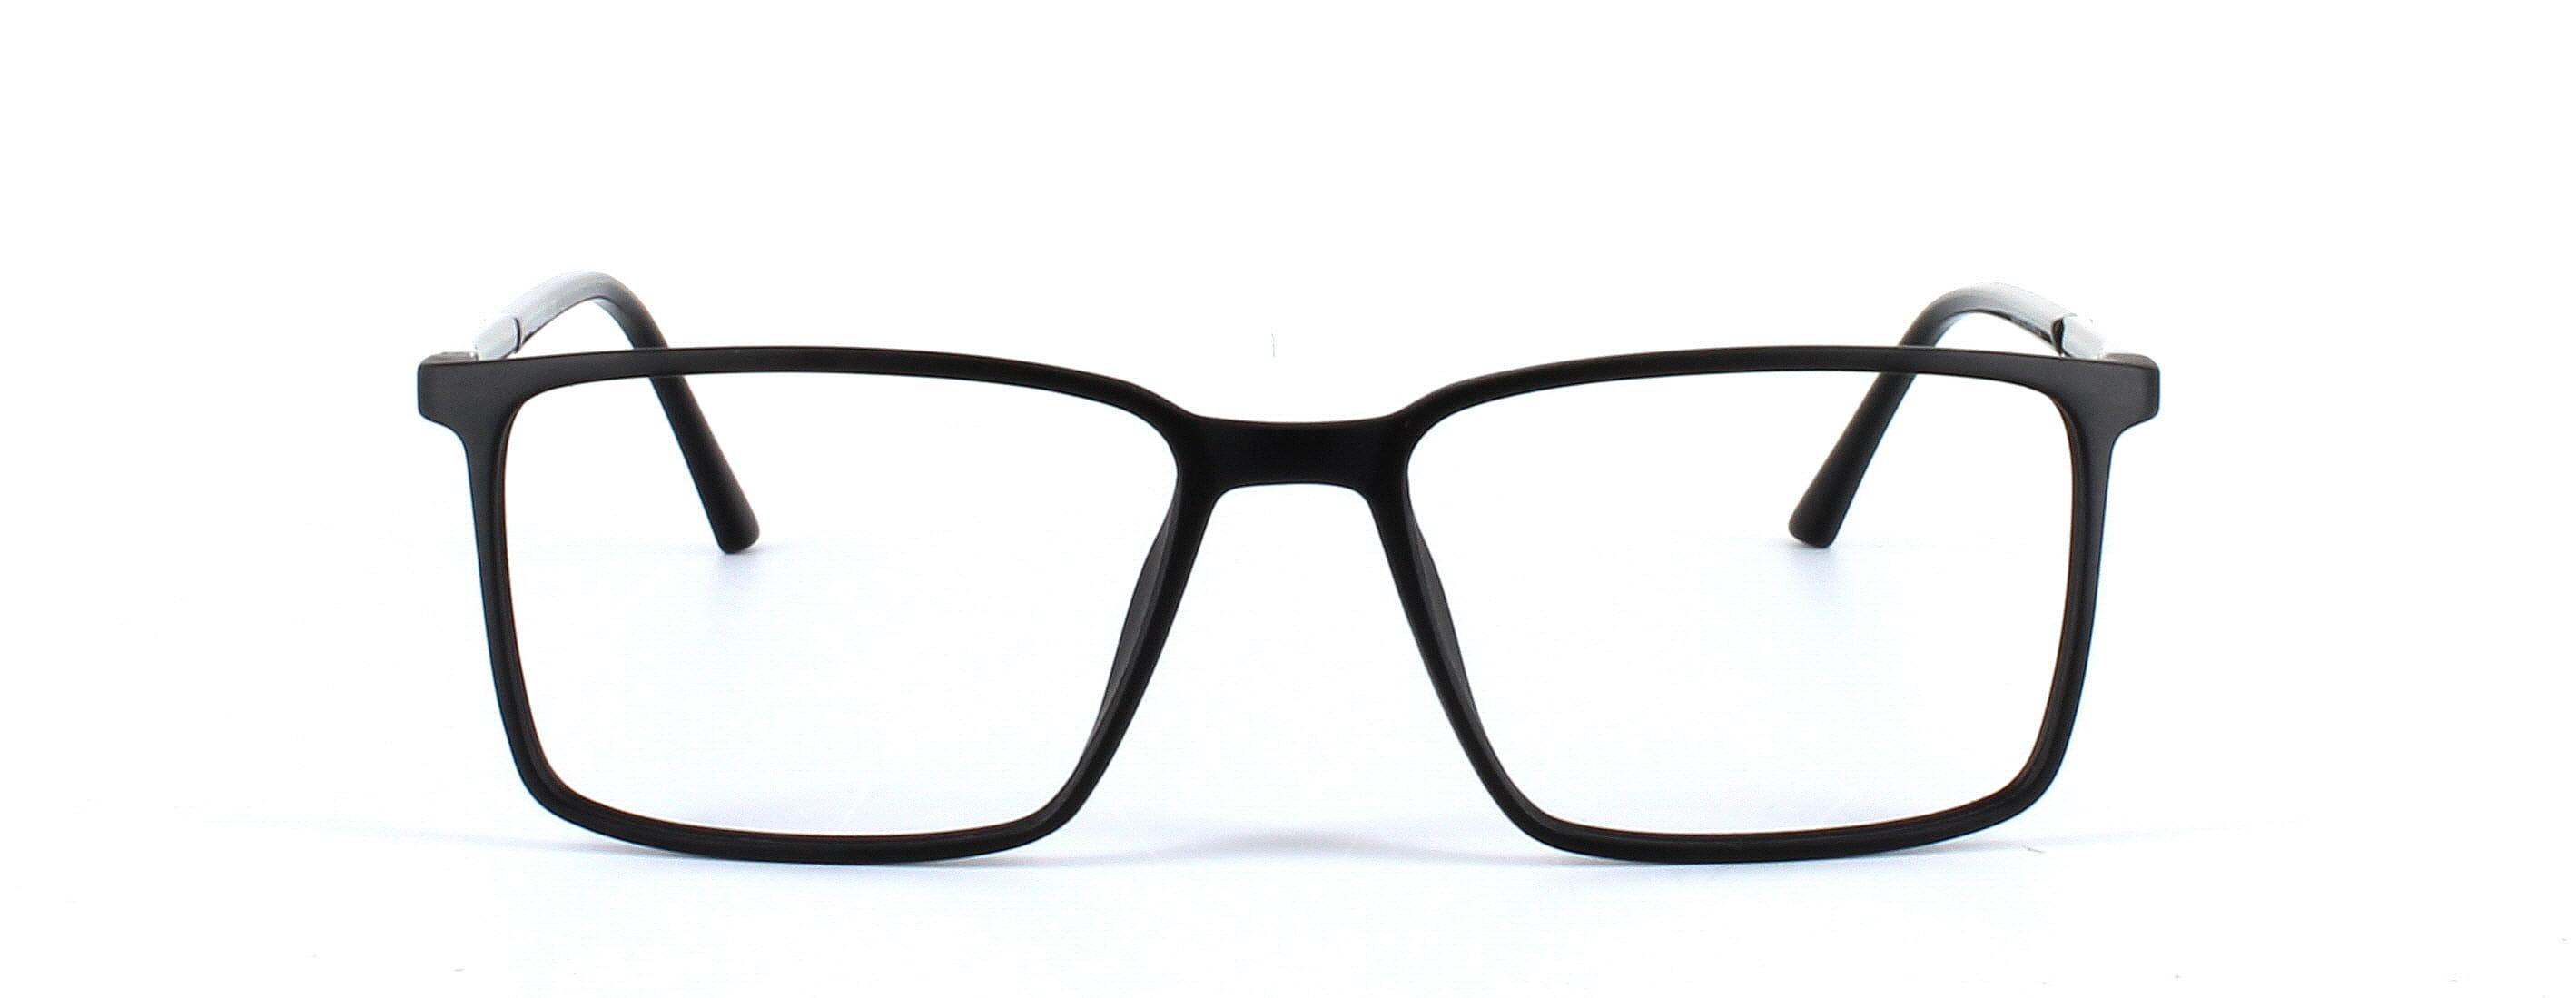 Preveza - Black - Unisex glasses image view 5